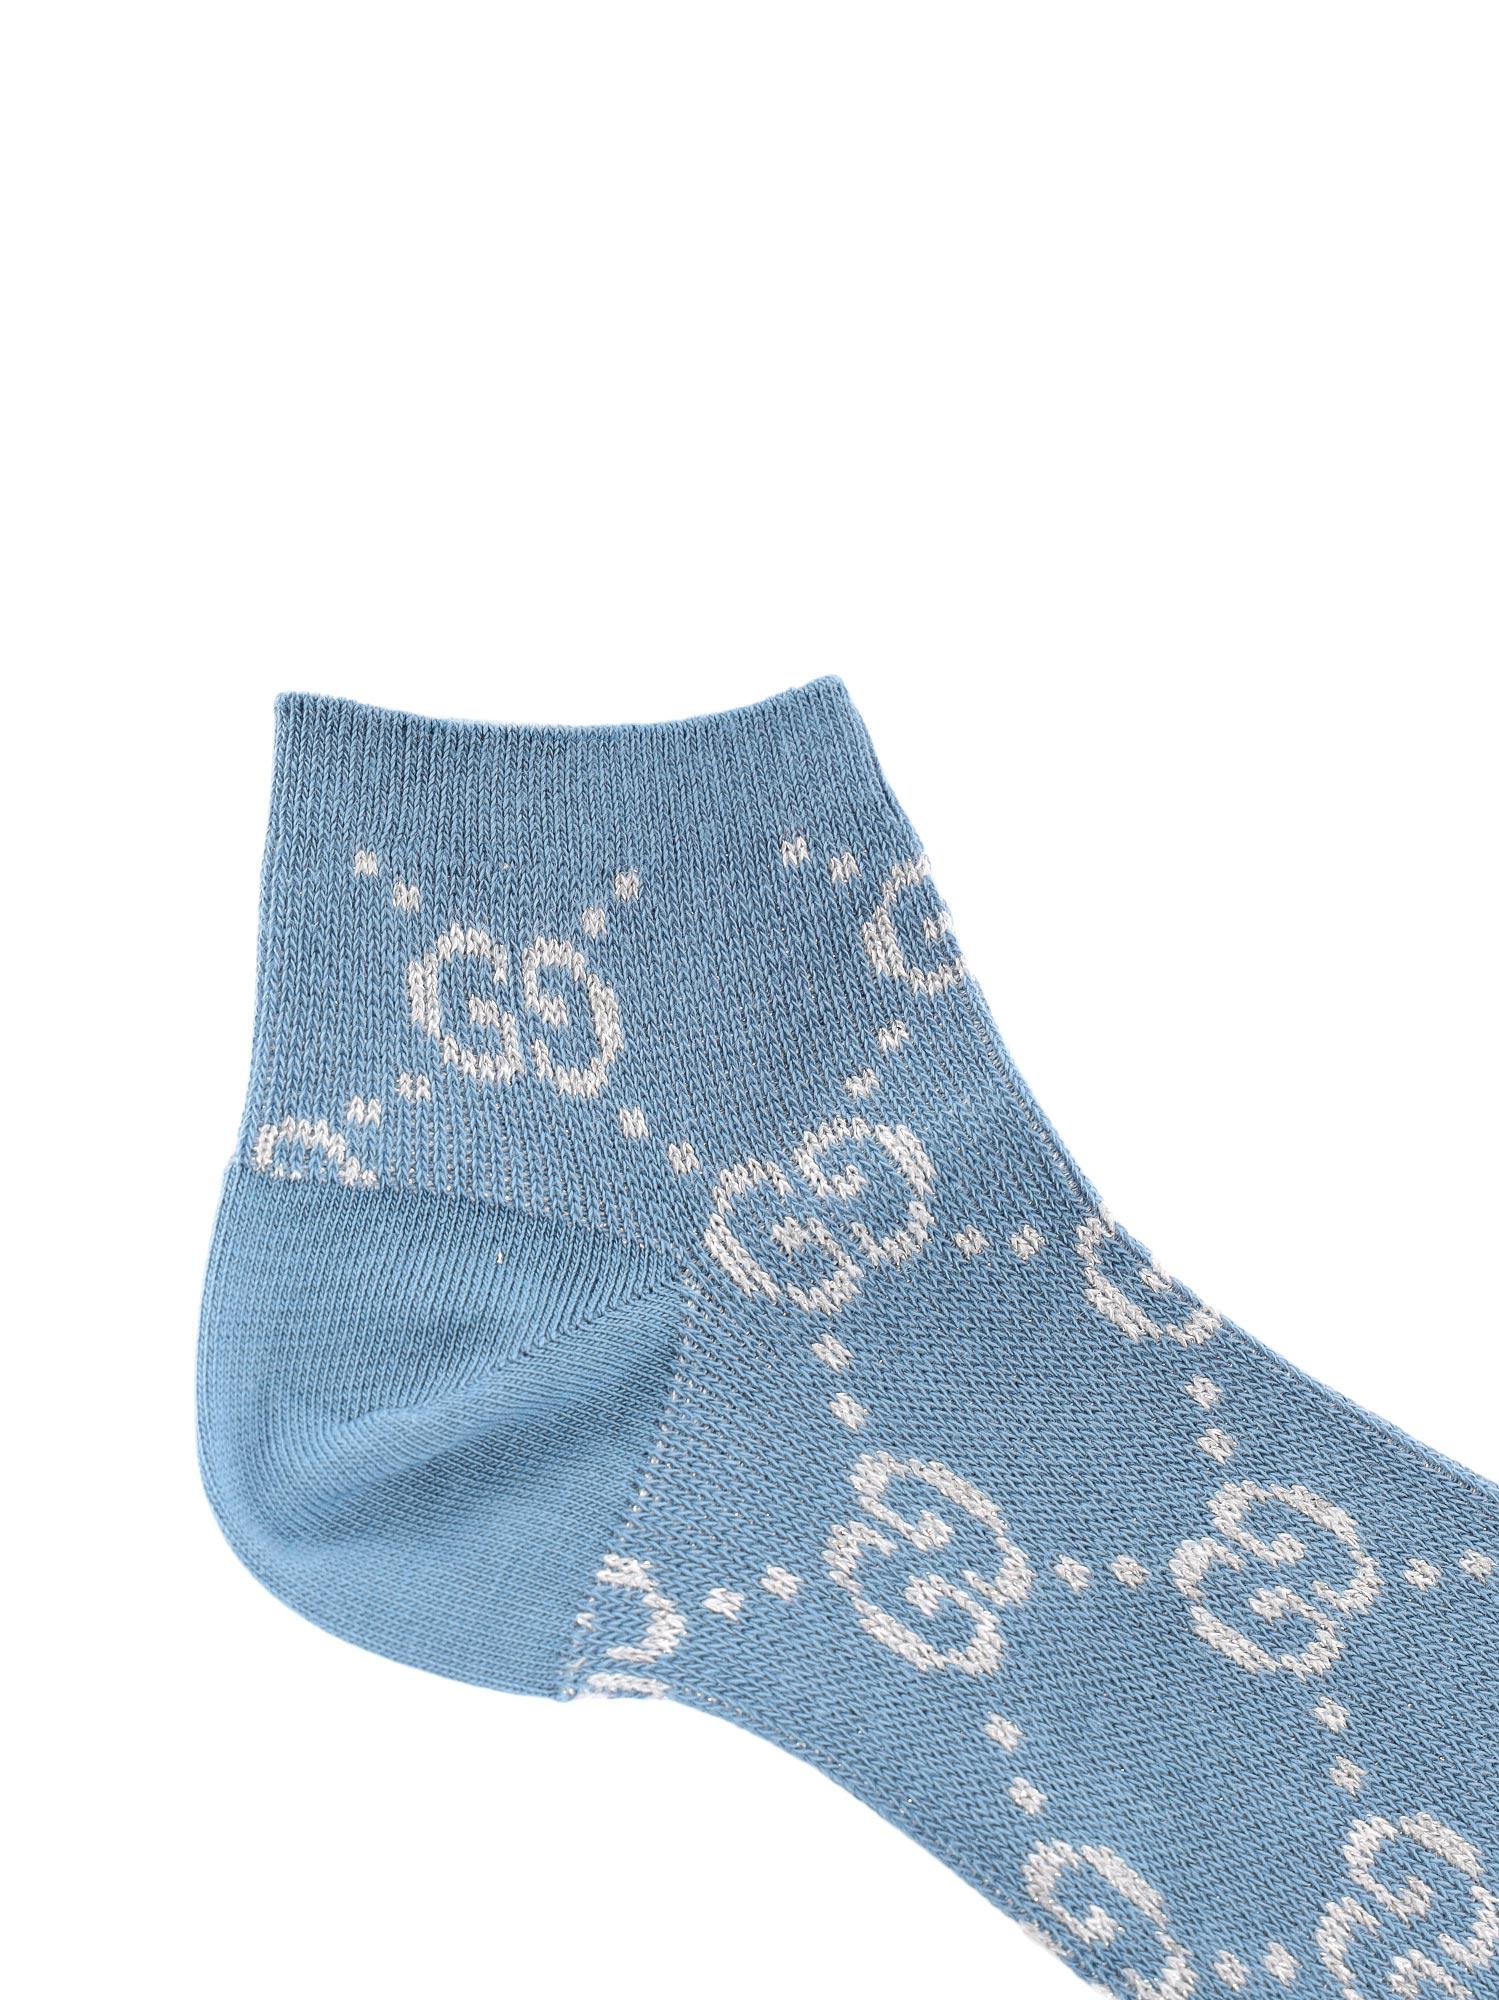 Gucci Metallic GG Supreme Socks in Blue | Lyst